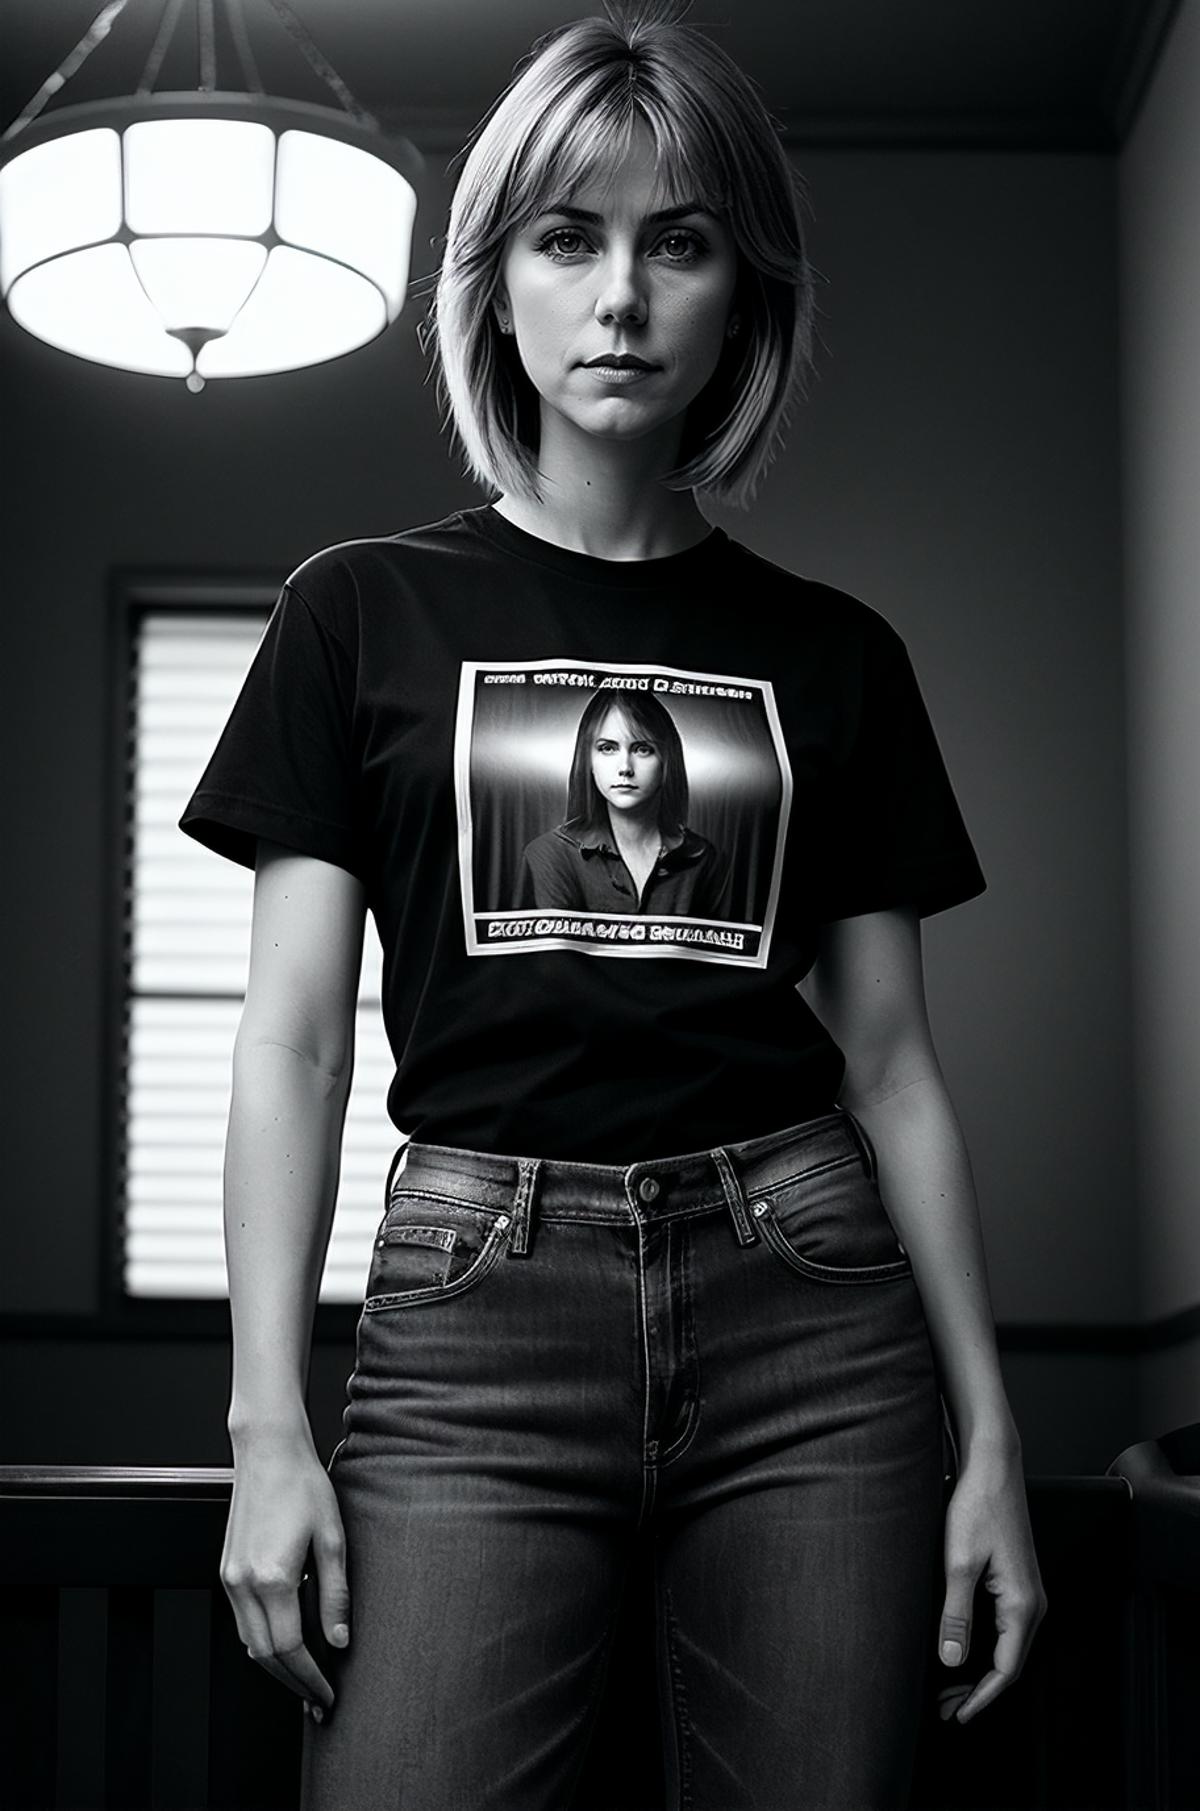 Jill Dando - Textual Inversion image by ElizaPottinger